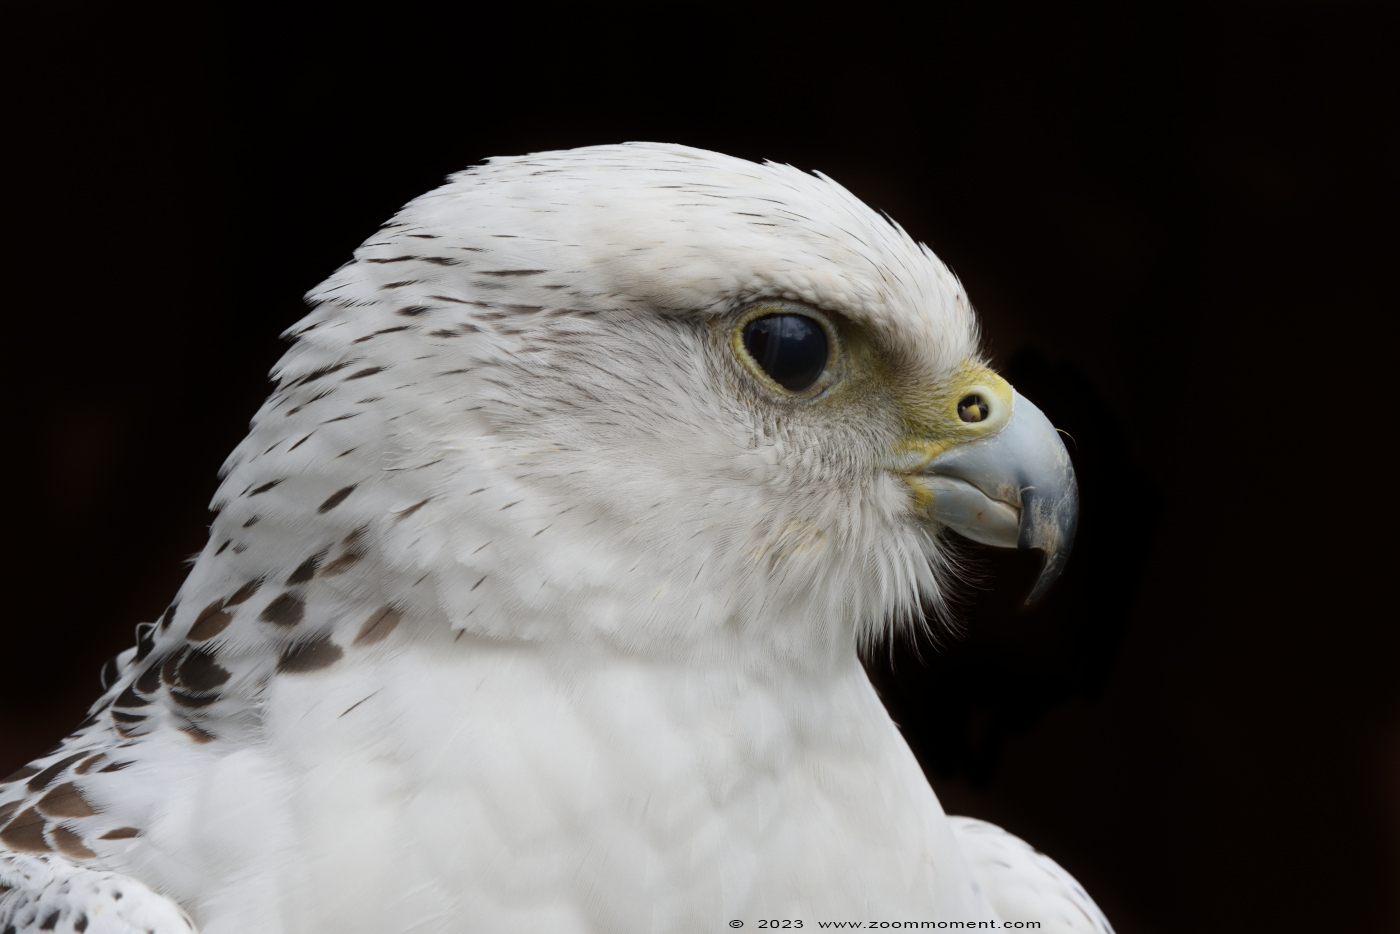 sakervalk ( Falco cherrug ) saker falcon
Trefwoorden: Neunkircher Zoo Germany sakervalk Falco cherrug saker falcon